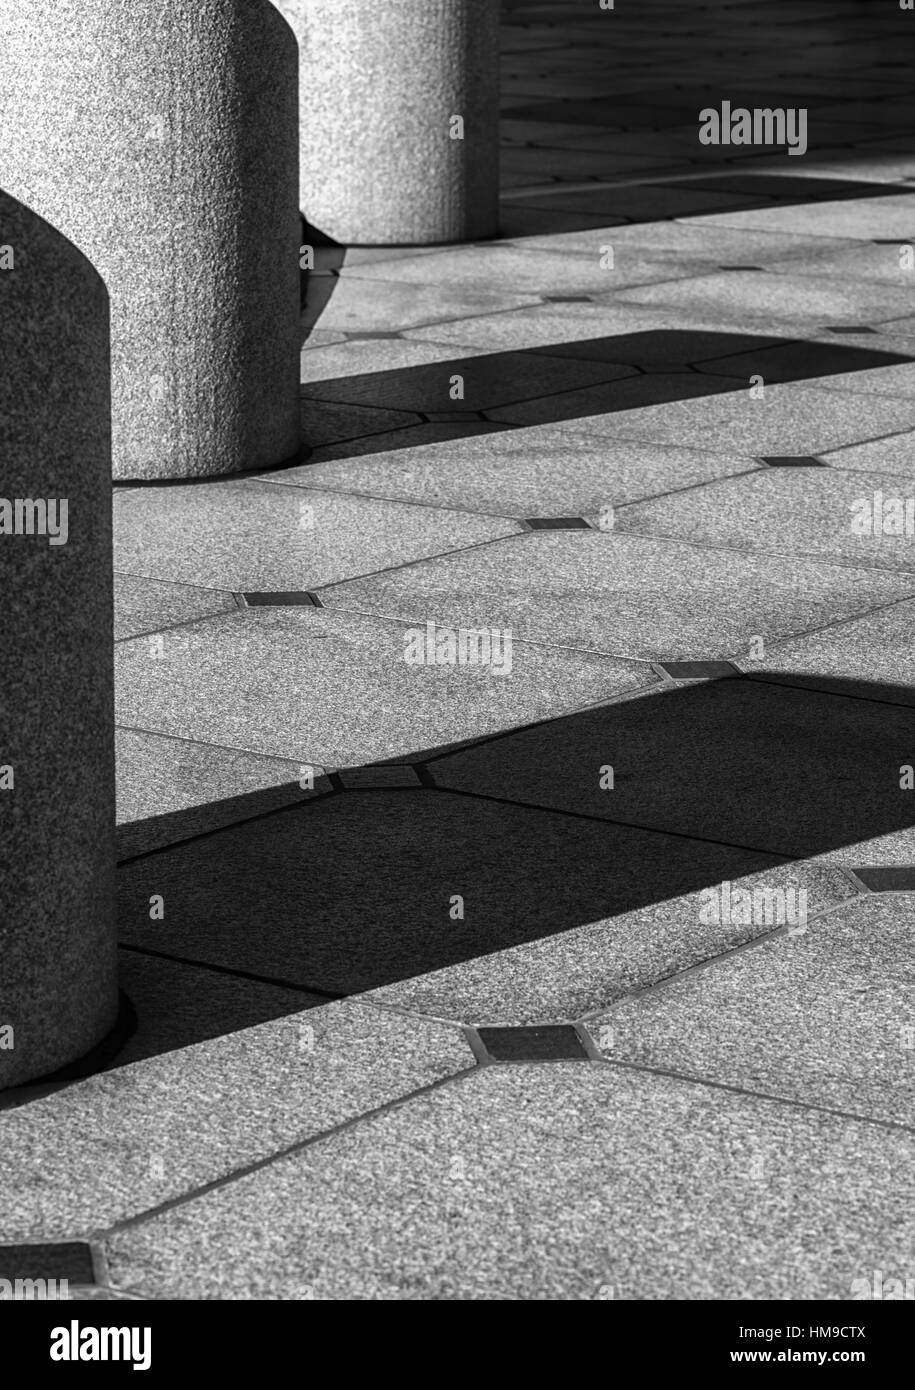 concrete columns casting shadows on the ground; urban geometry. Stock Photo